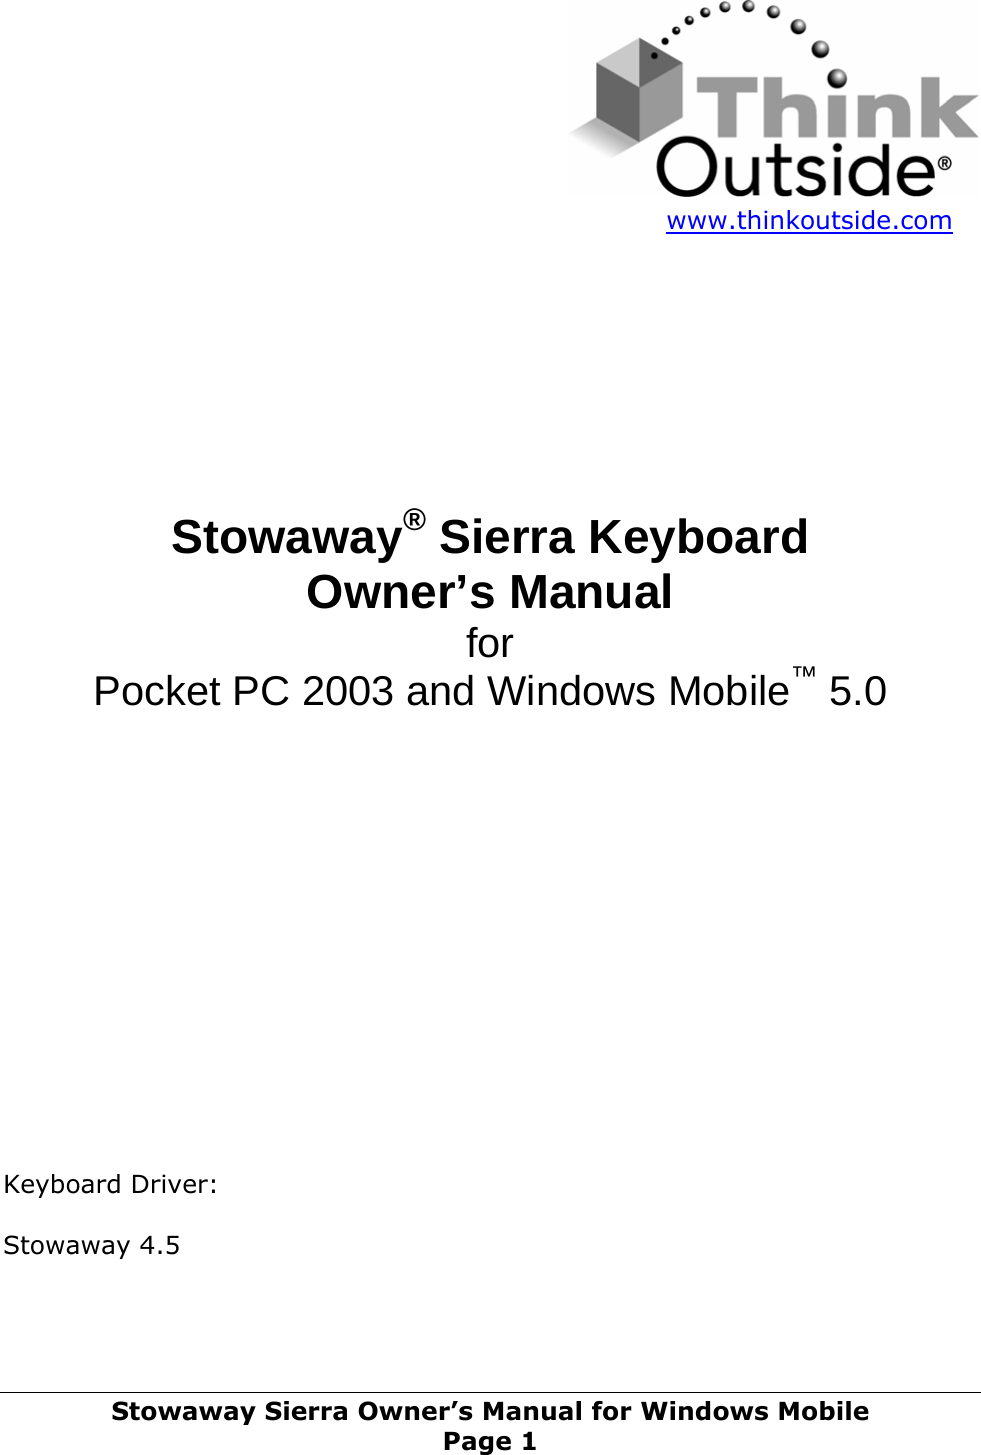     www.thinkoutside.com         Stowaway® Sierra Keyboard Owner’s Manual for Pocket PC 2003 and Windows Mobile™ 5.0                Keyboard Driver:  Stowaway 4.5 Stowaway Sierra Owner’s Manual for Windows Mobile Page 1 